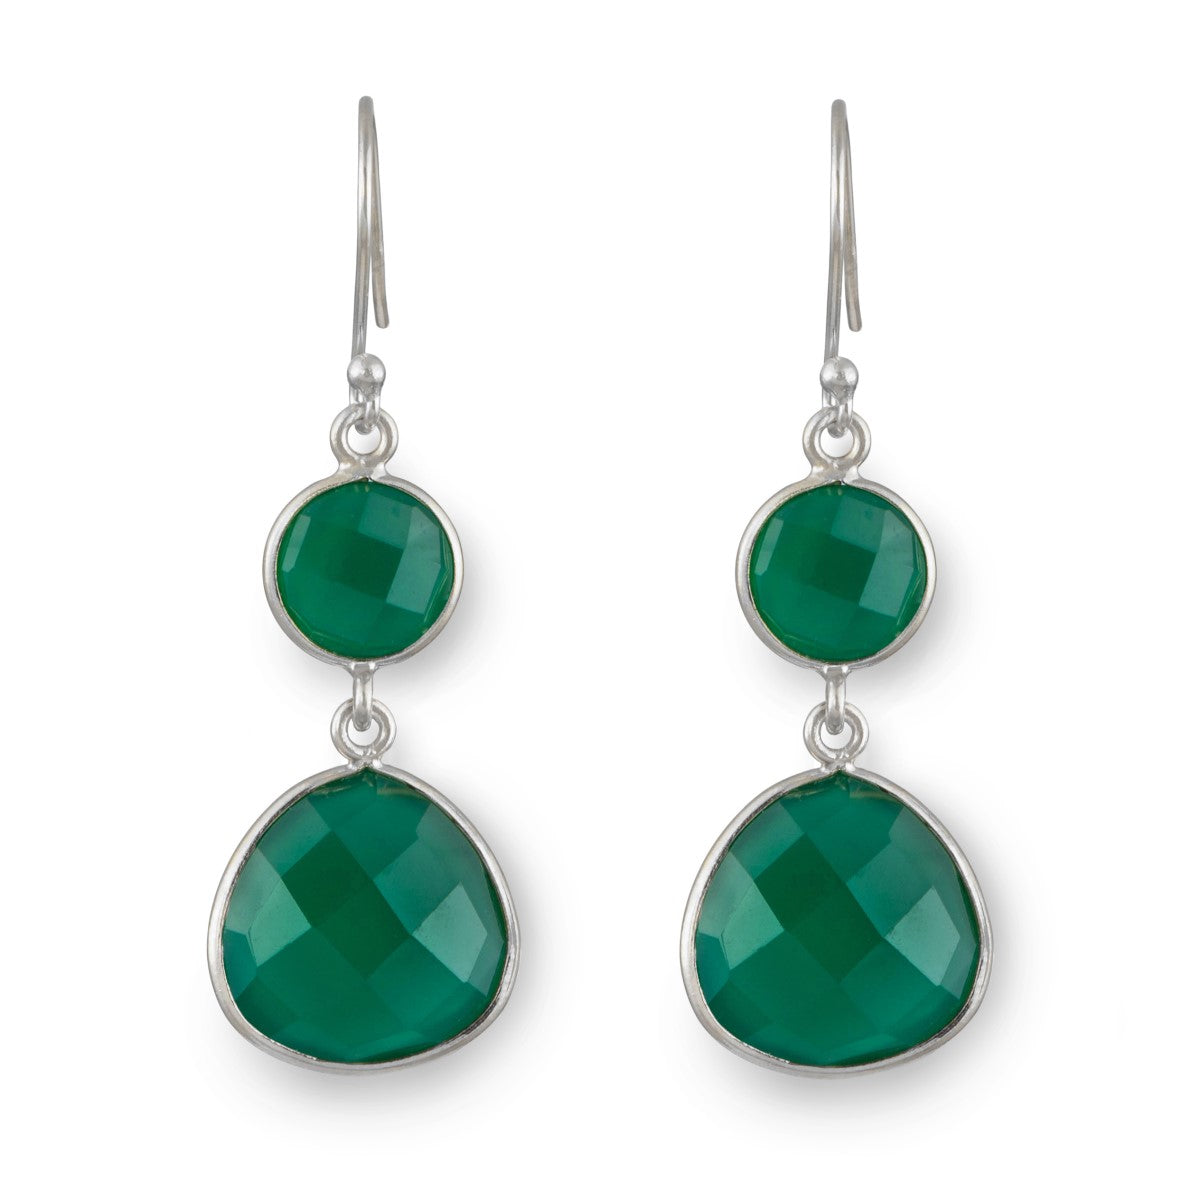 Green Onyx Gemstone Earrings in Sterling Silver - Triangular